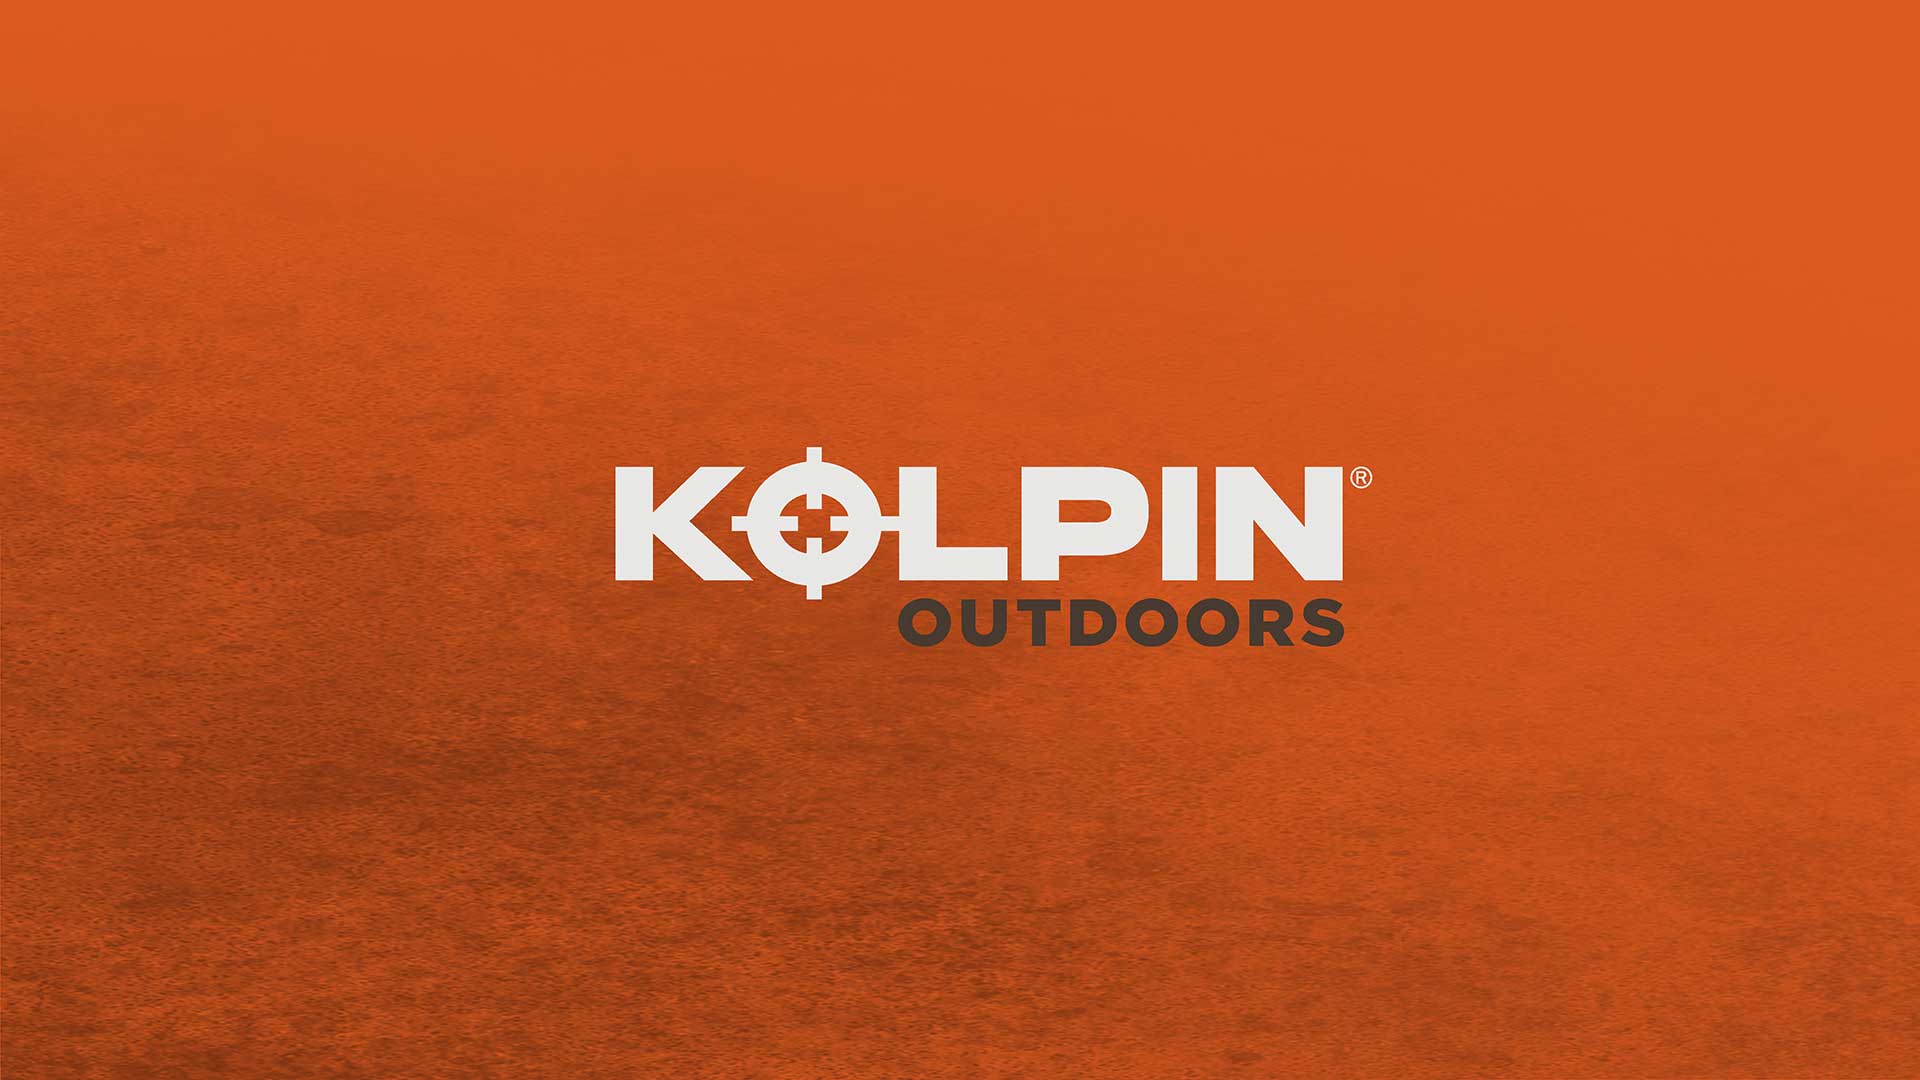 Kolpin Outdoors Brand identity design